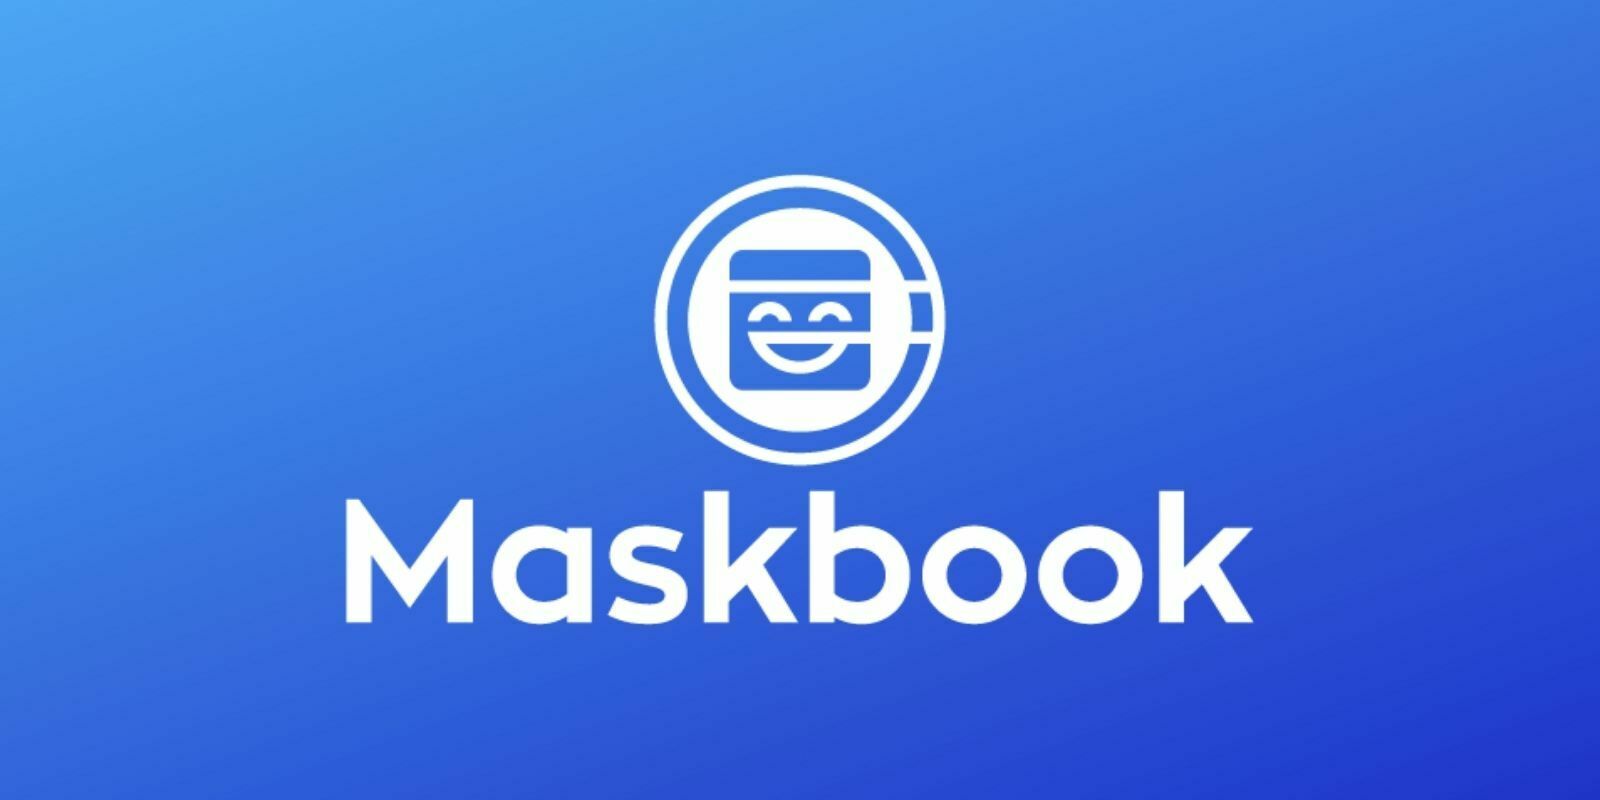 L'extension Maskbook permet d'utiliser Uniswap directement depuis Twitter